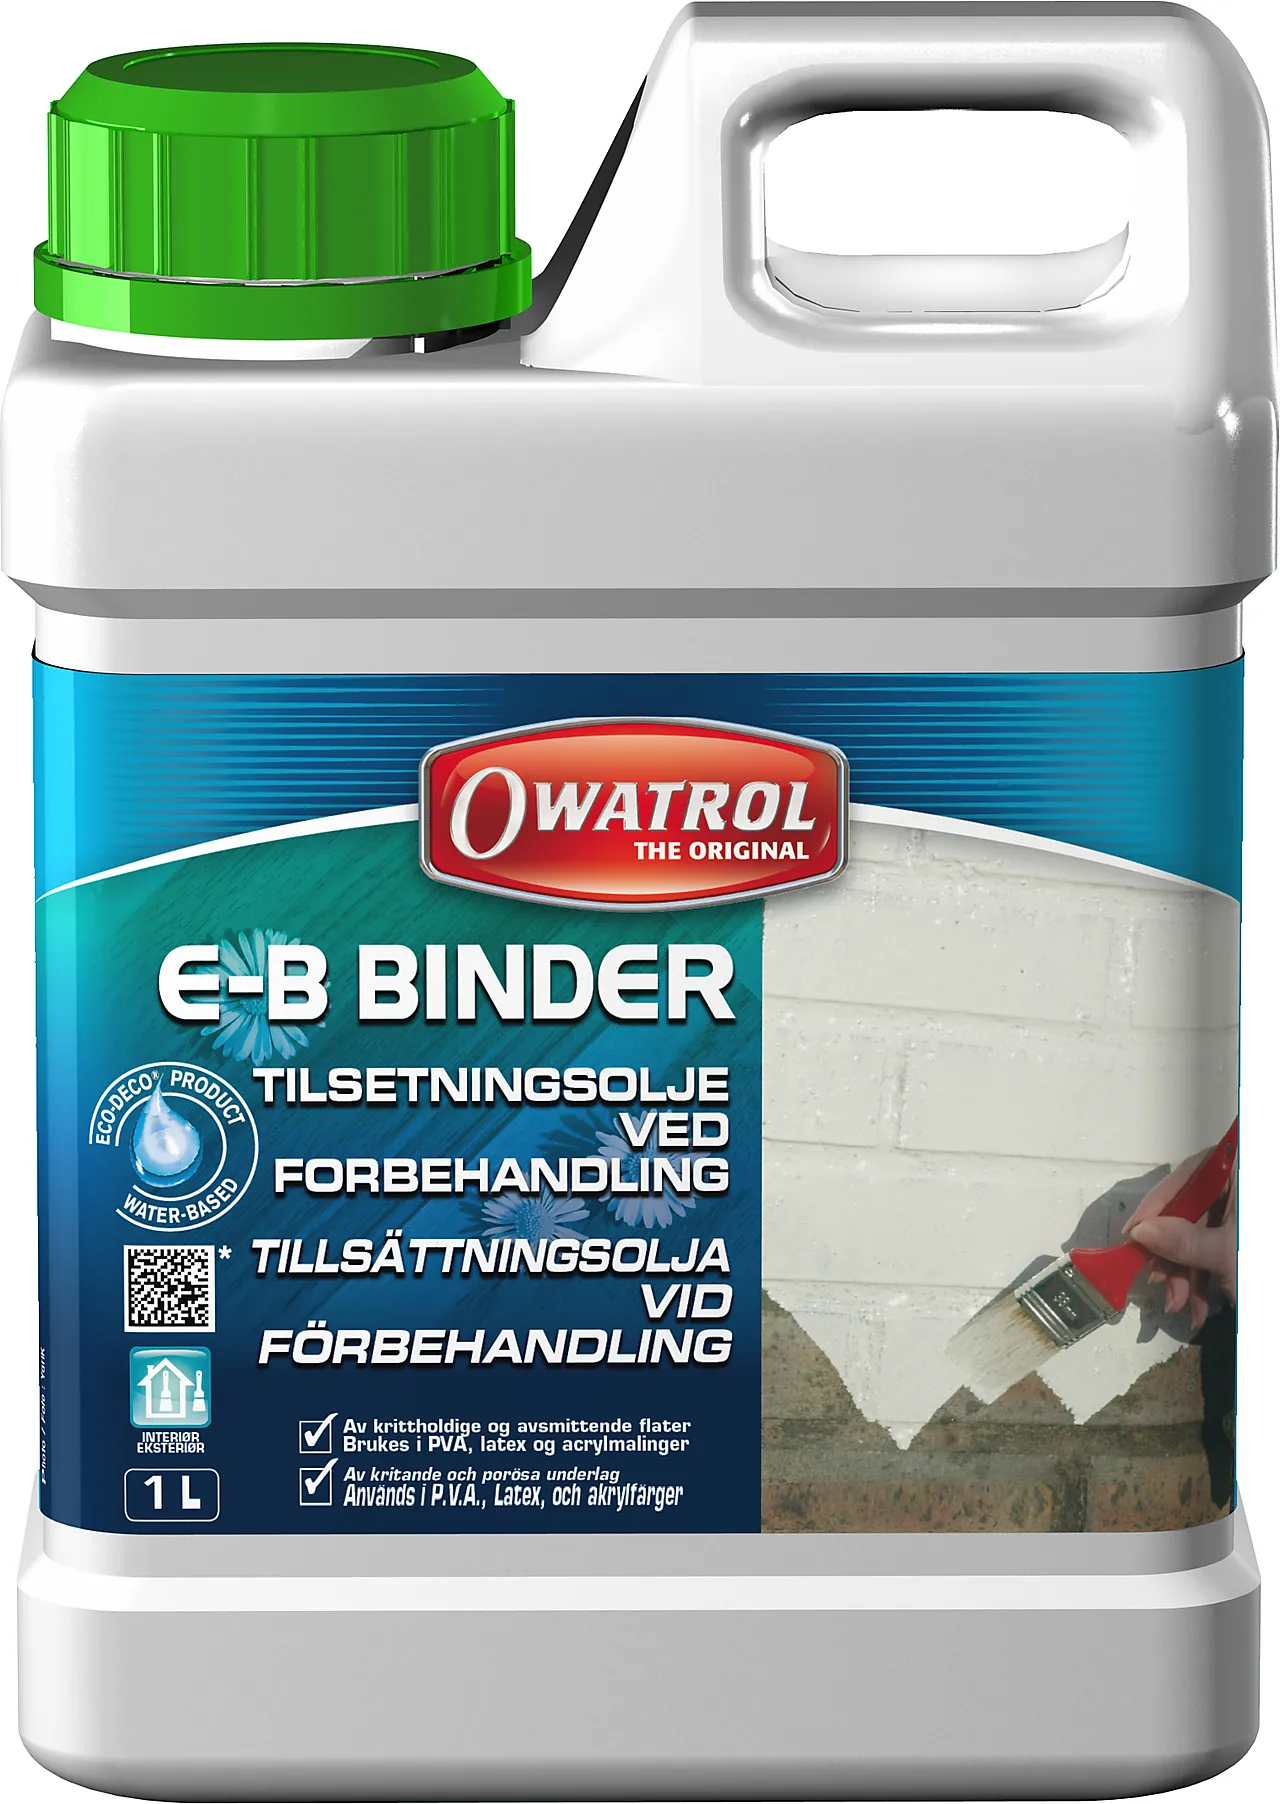 E-B Binder 1L